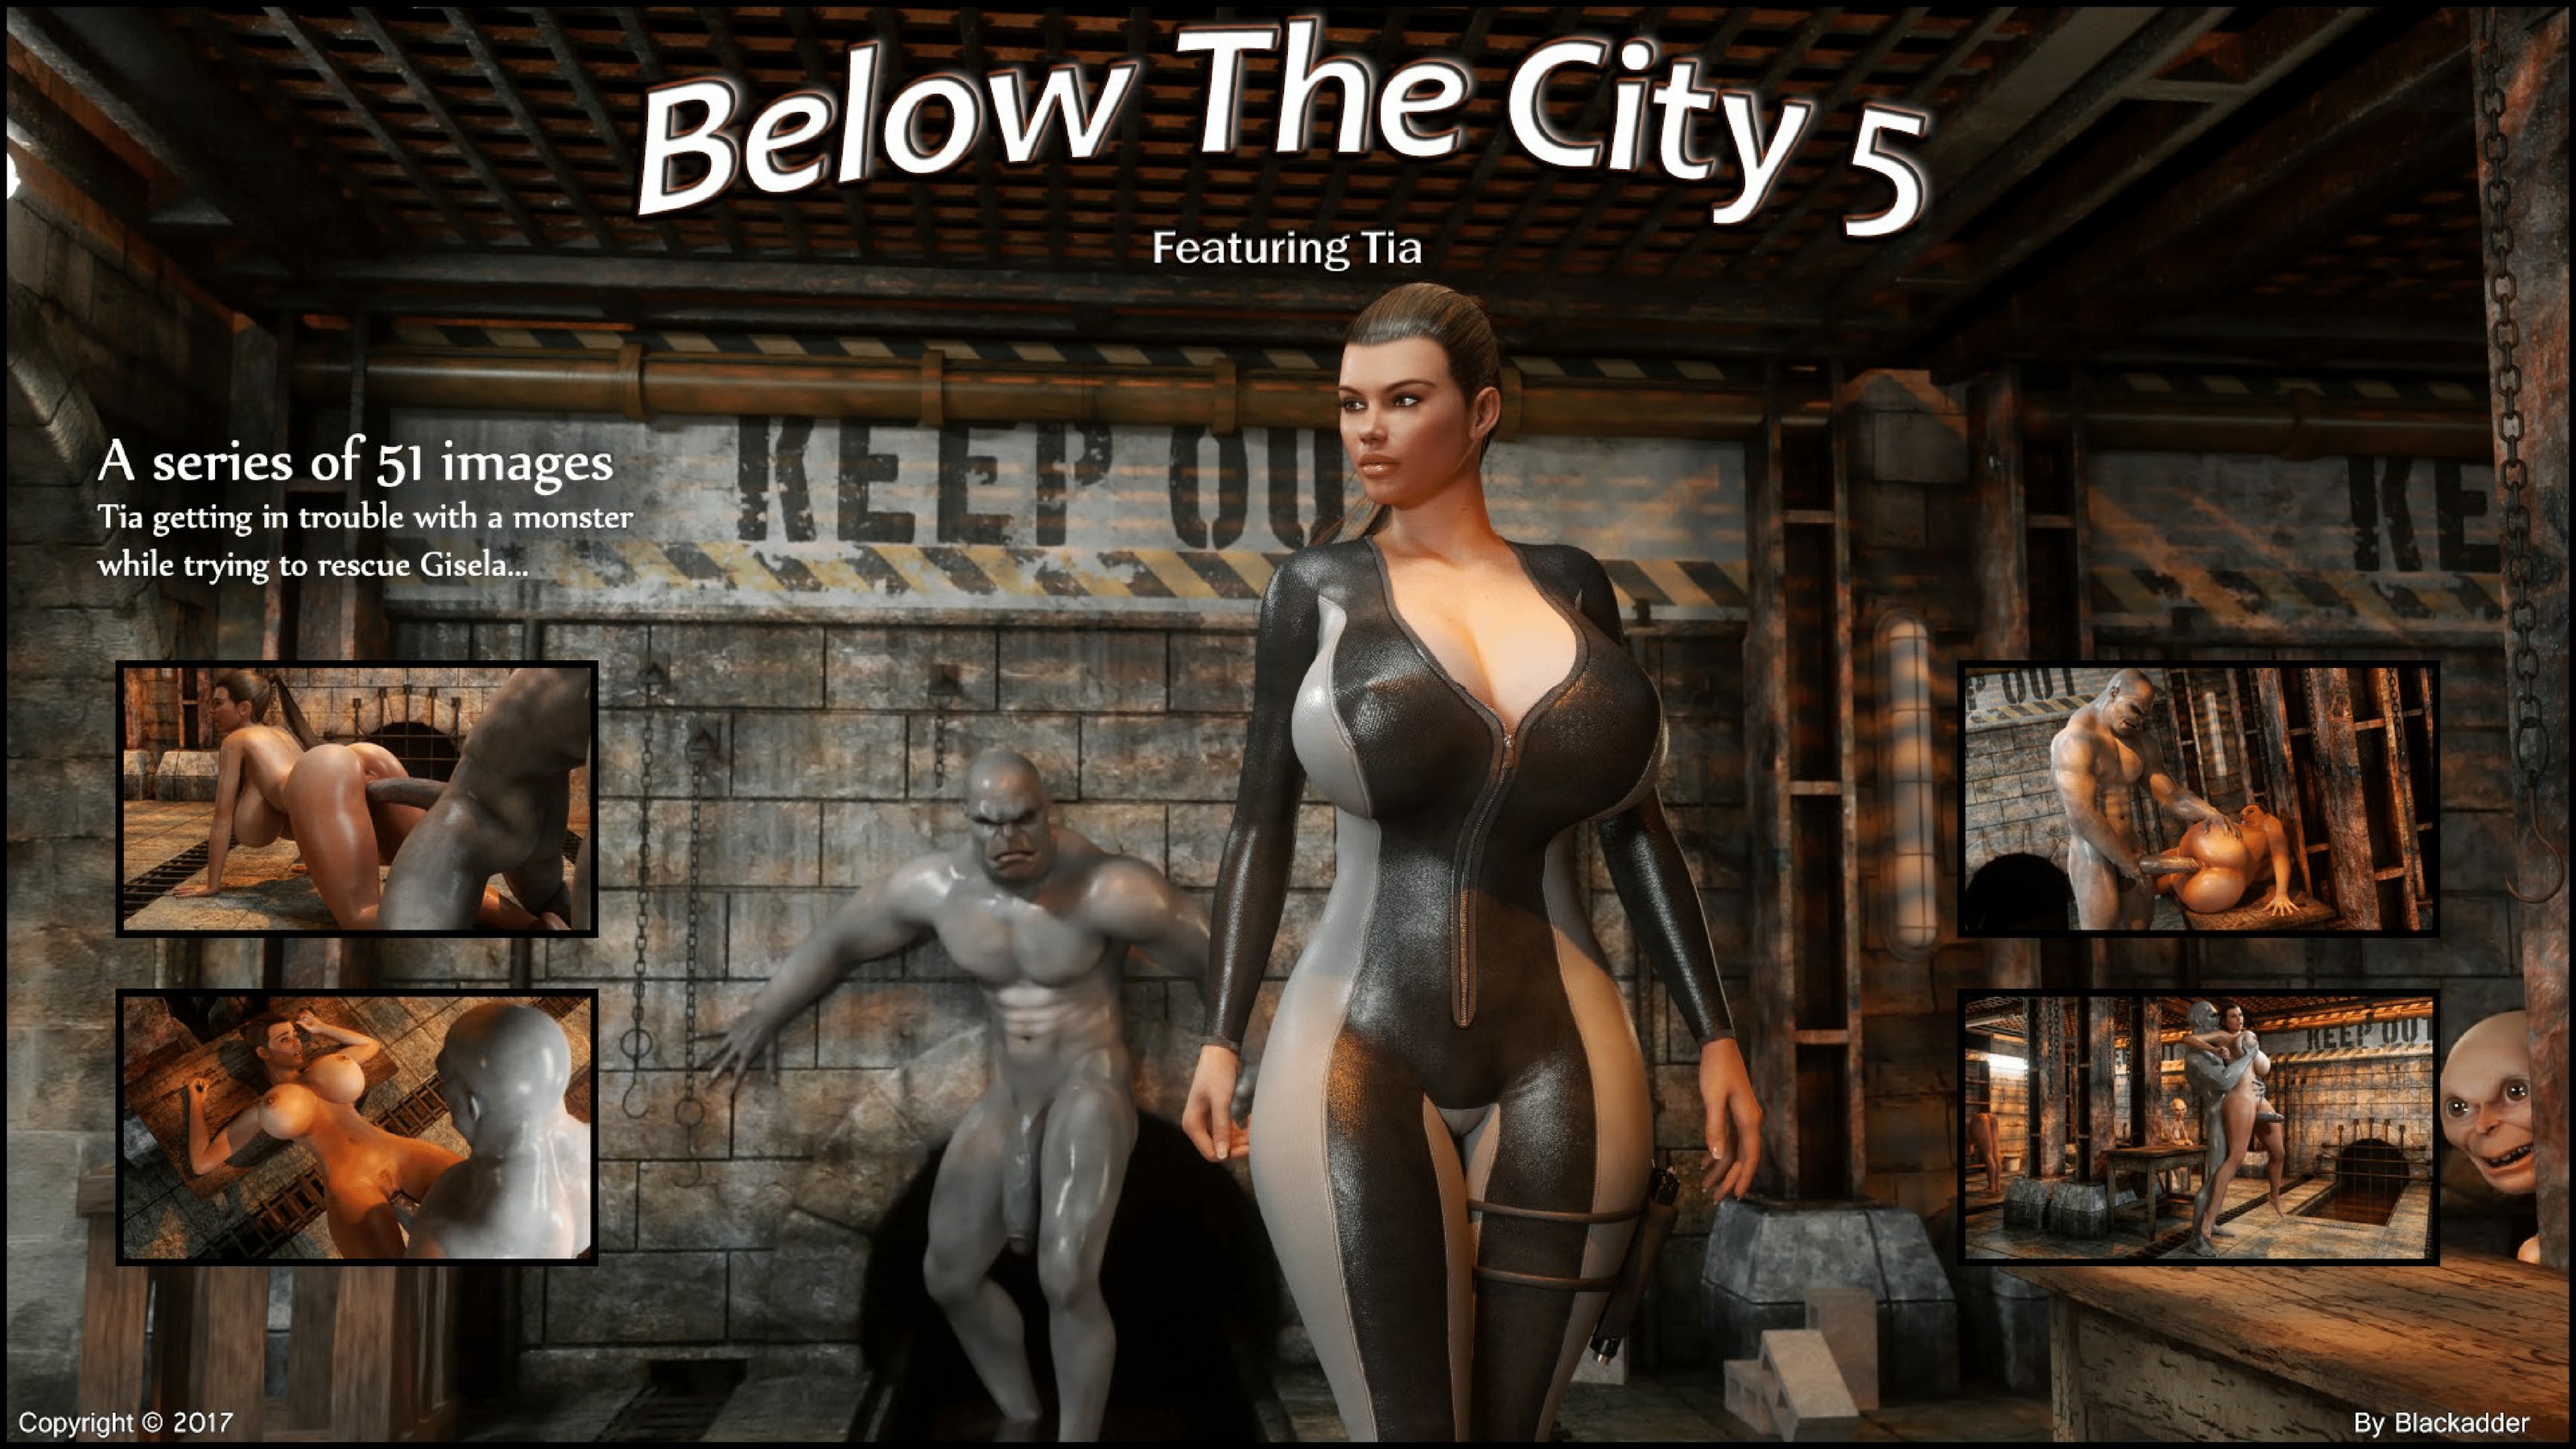 Fantastic 3d comic from Blackadder - Below The City 5